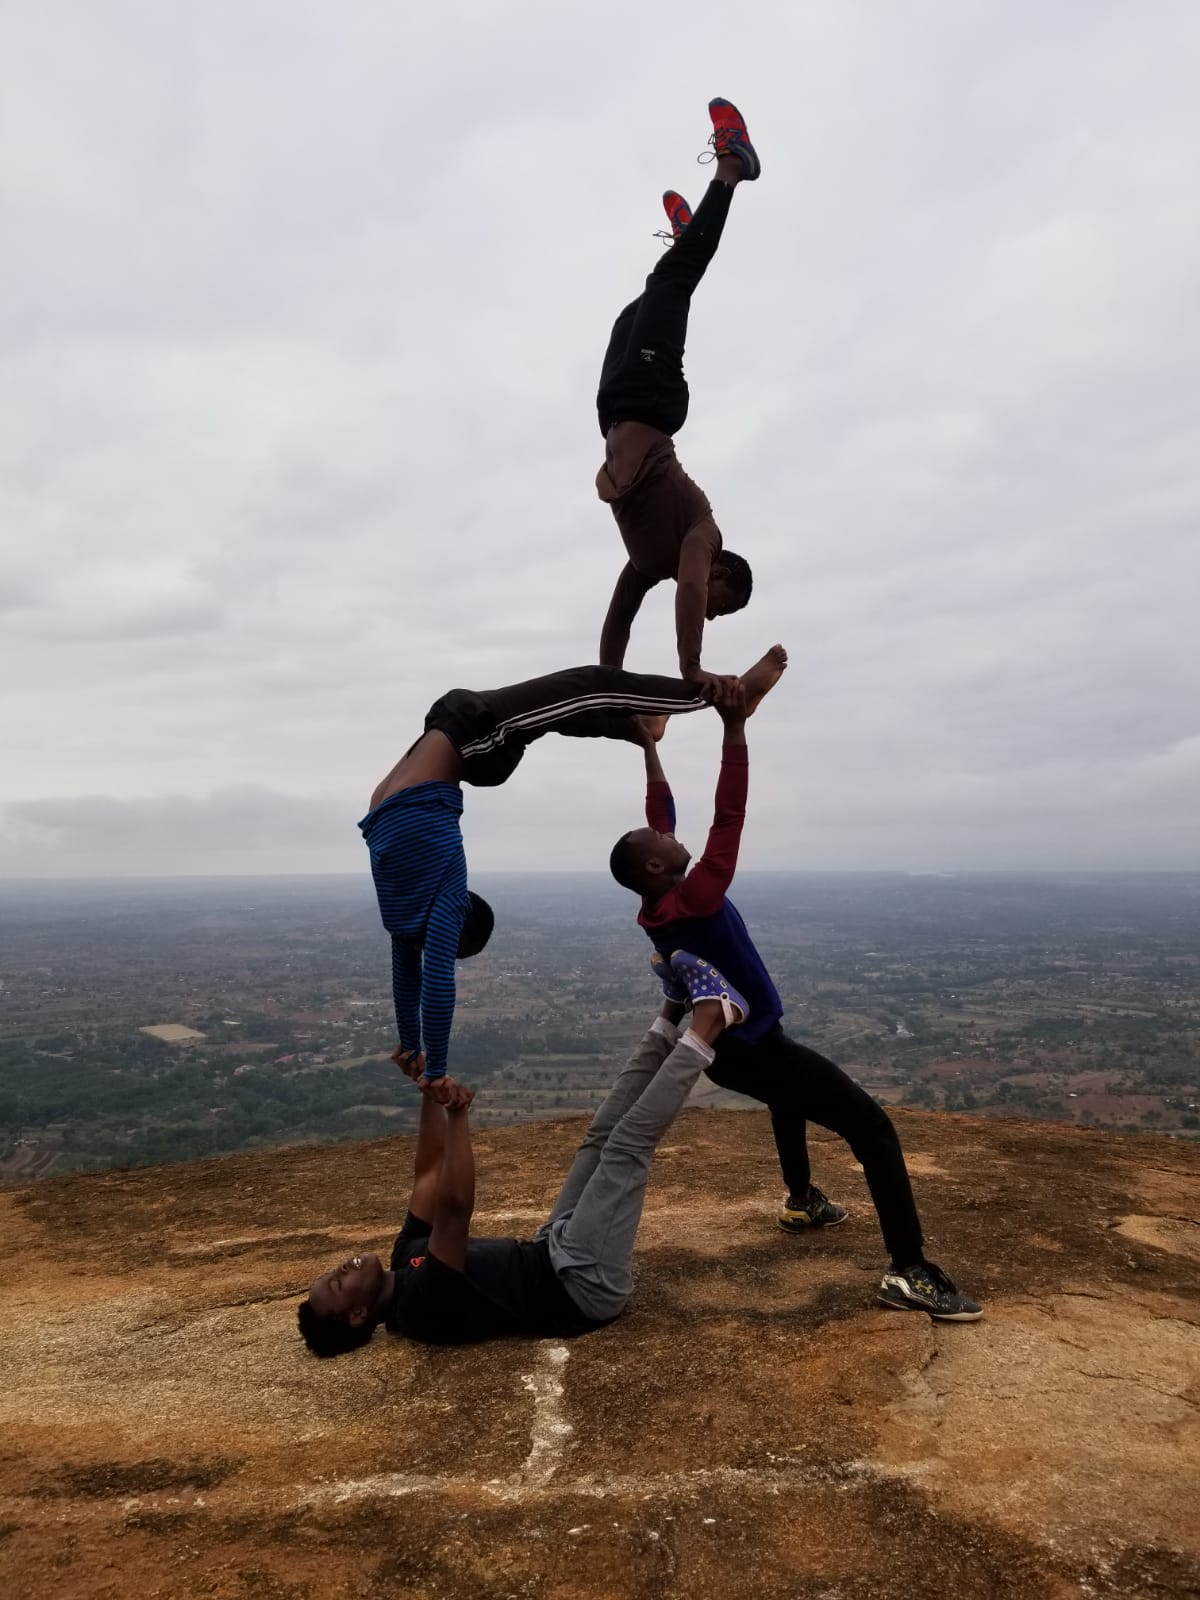 MCF's talented acrobats